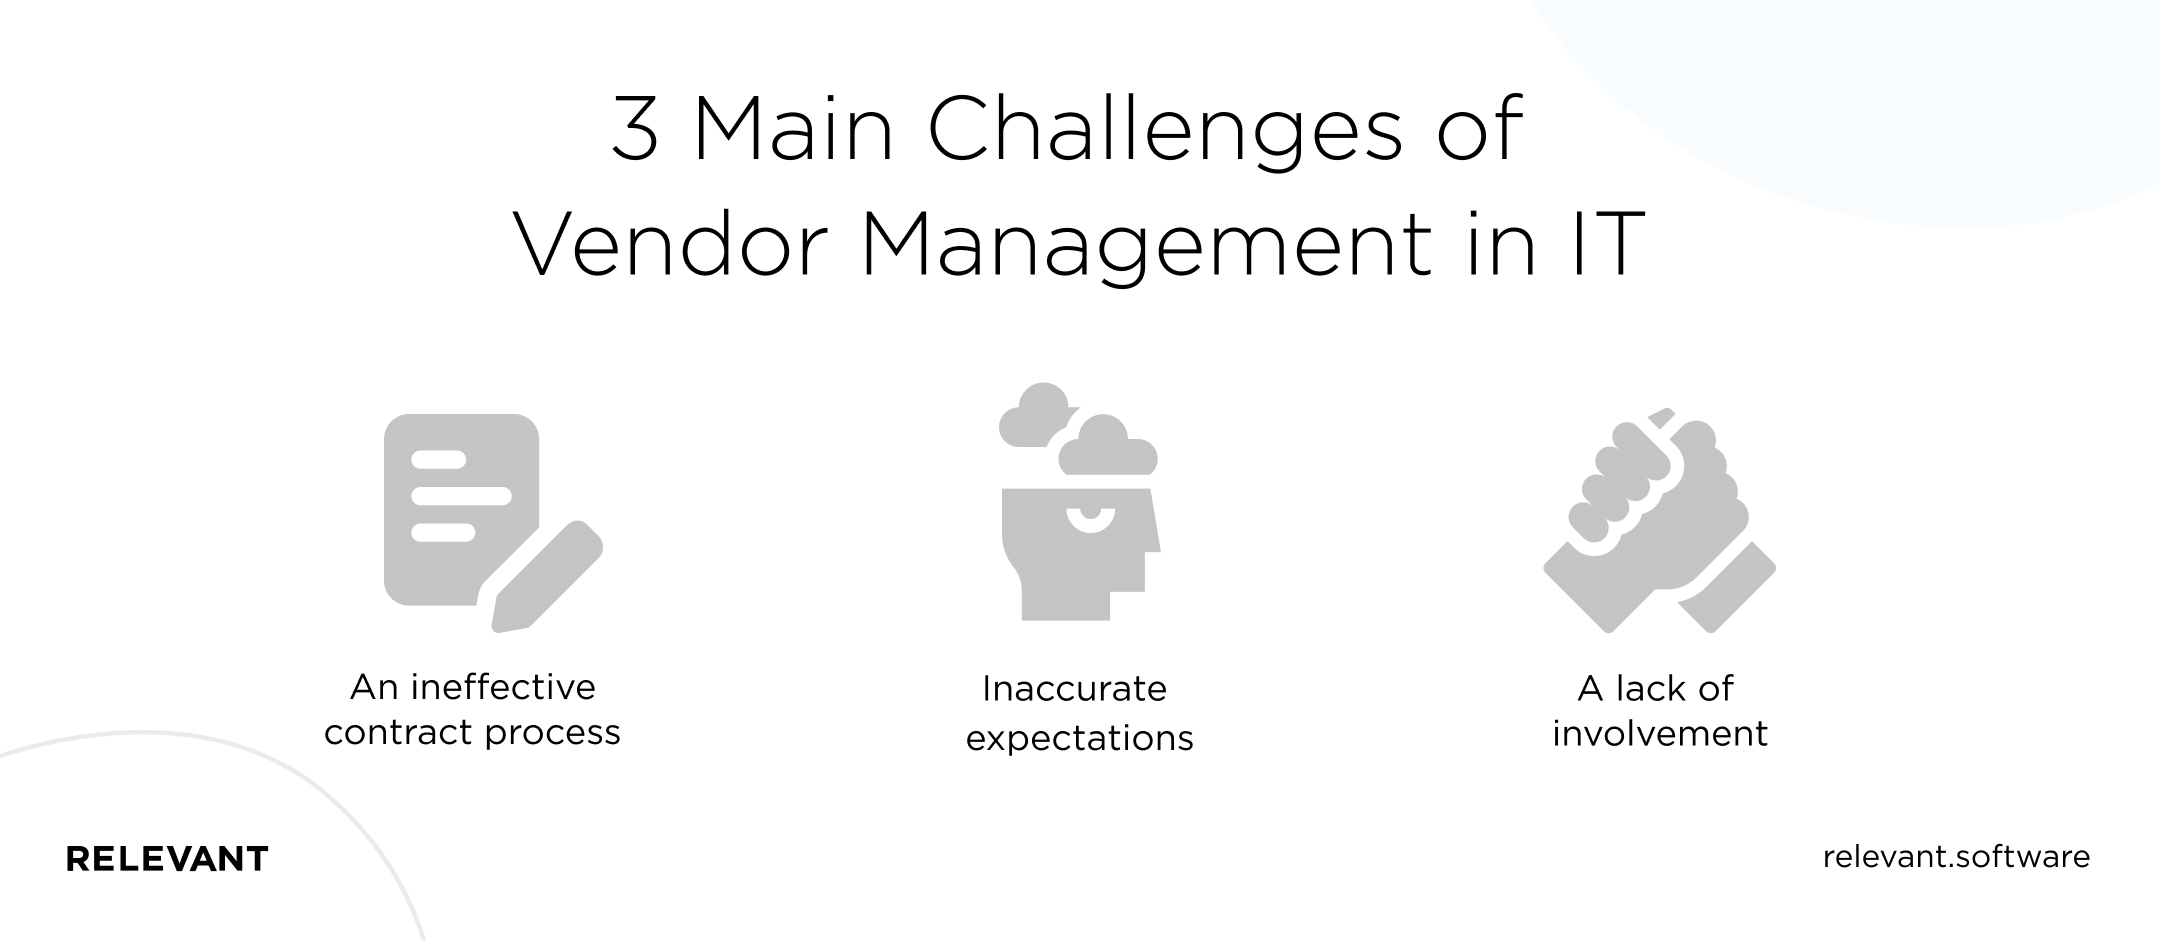 3 Main Challenges of Vendor Management in IT